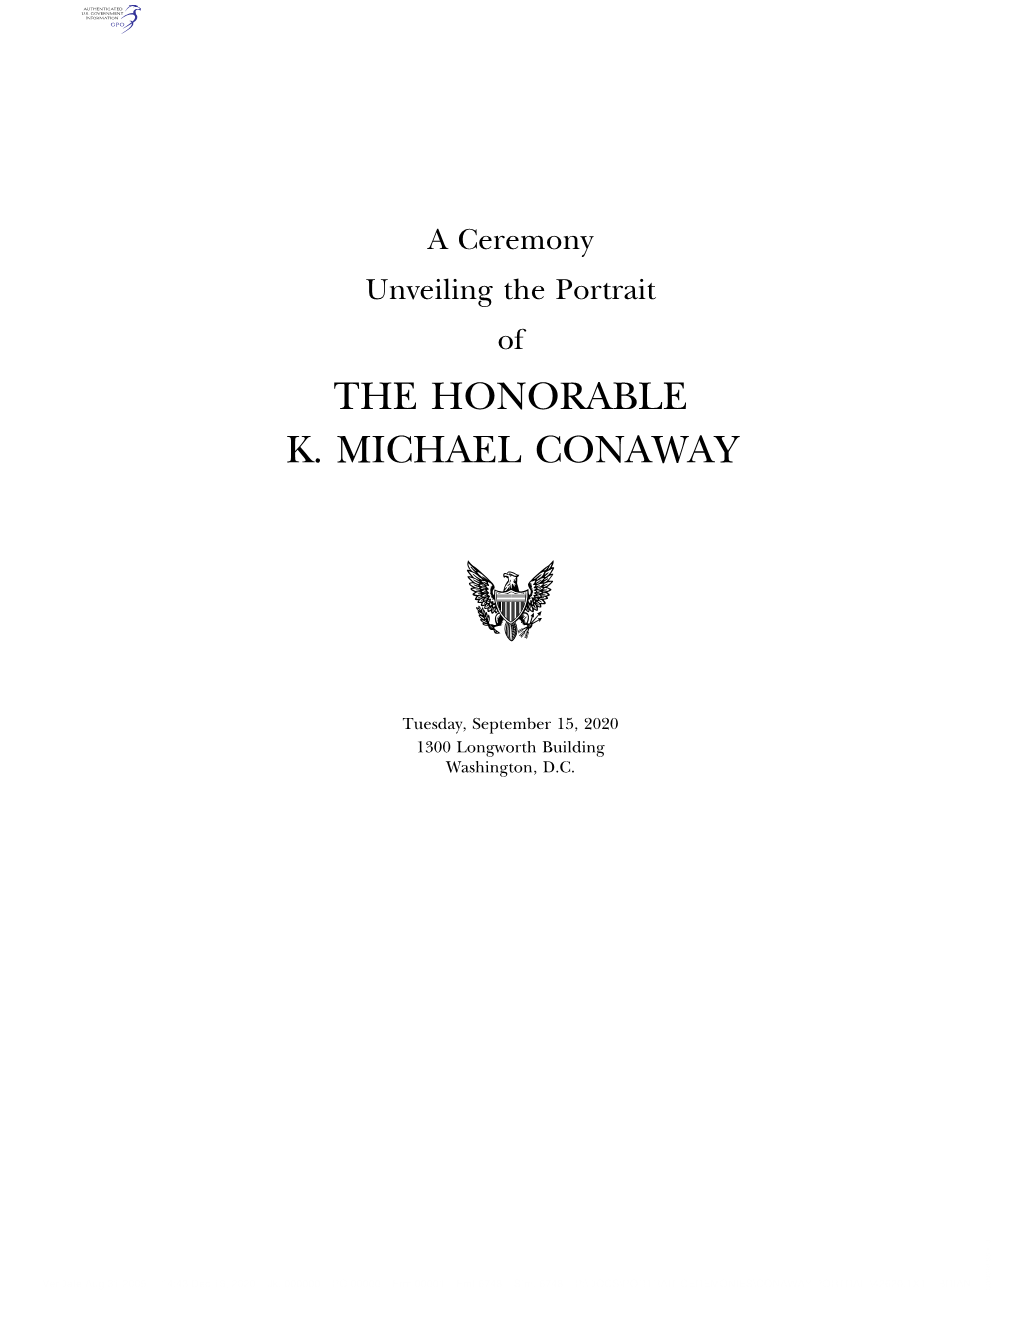 The Honorable K. Michael Conaway